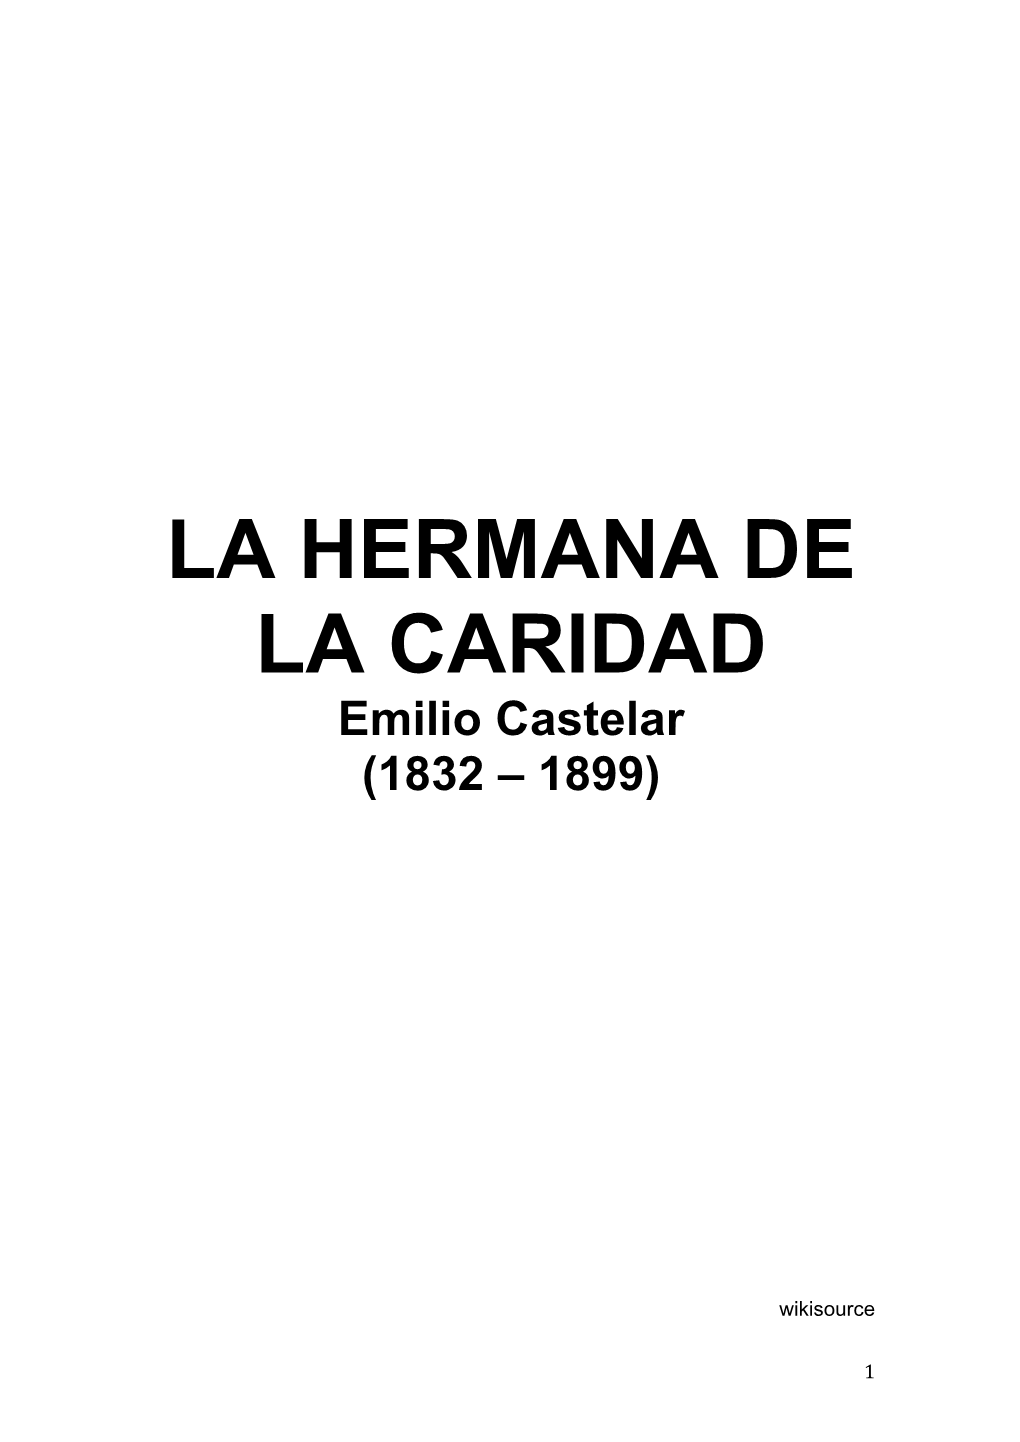 Castelar, Emilio, LA HERMANA DE LA CARIDAD